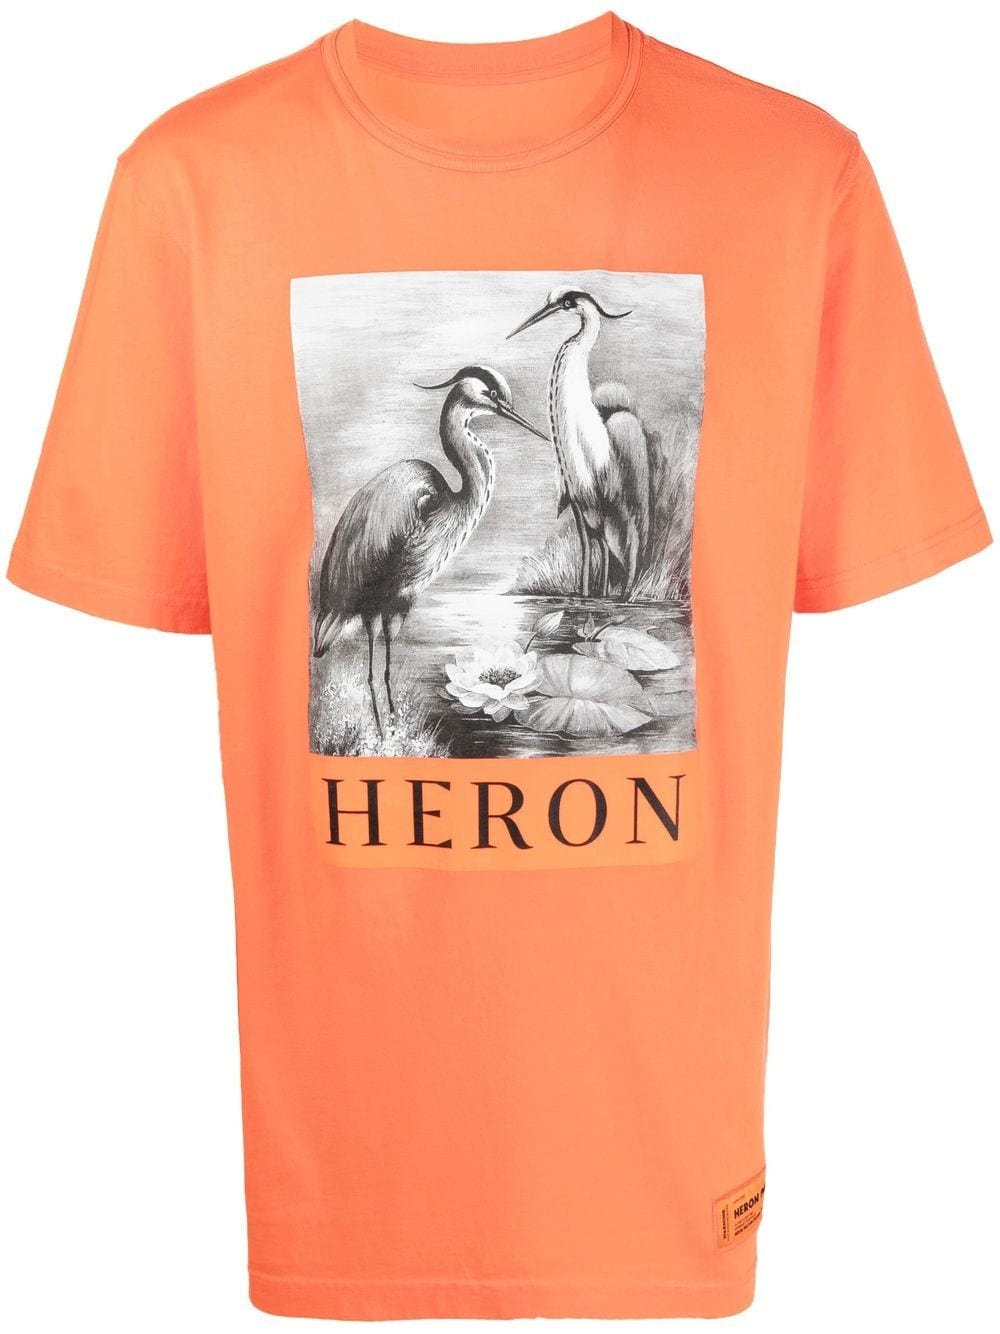 Heron print crew neck T-shirt